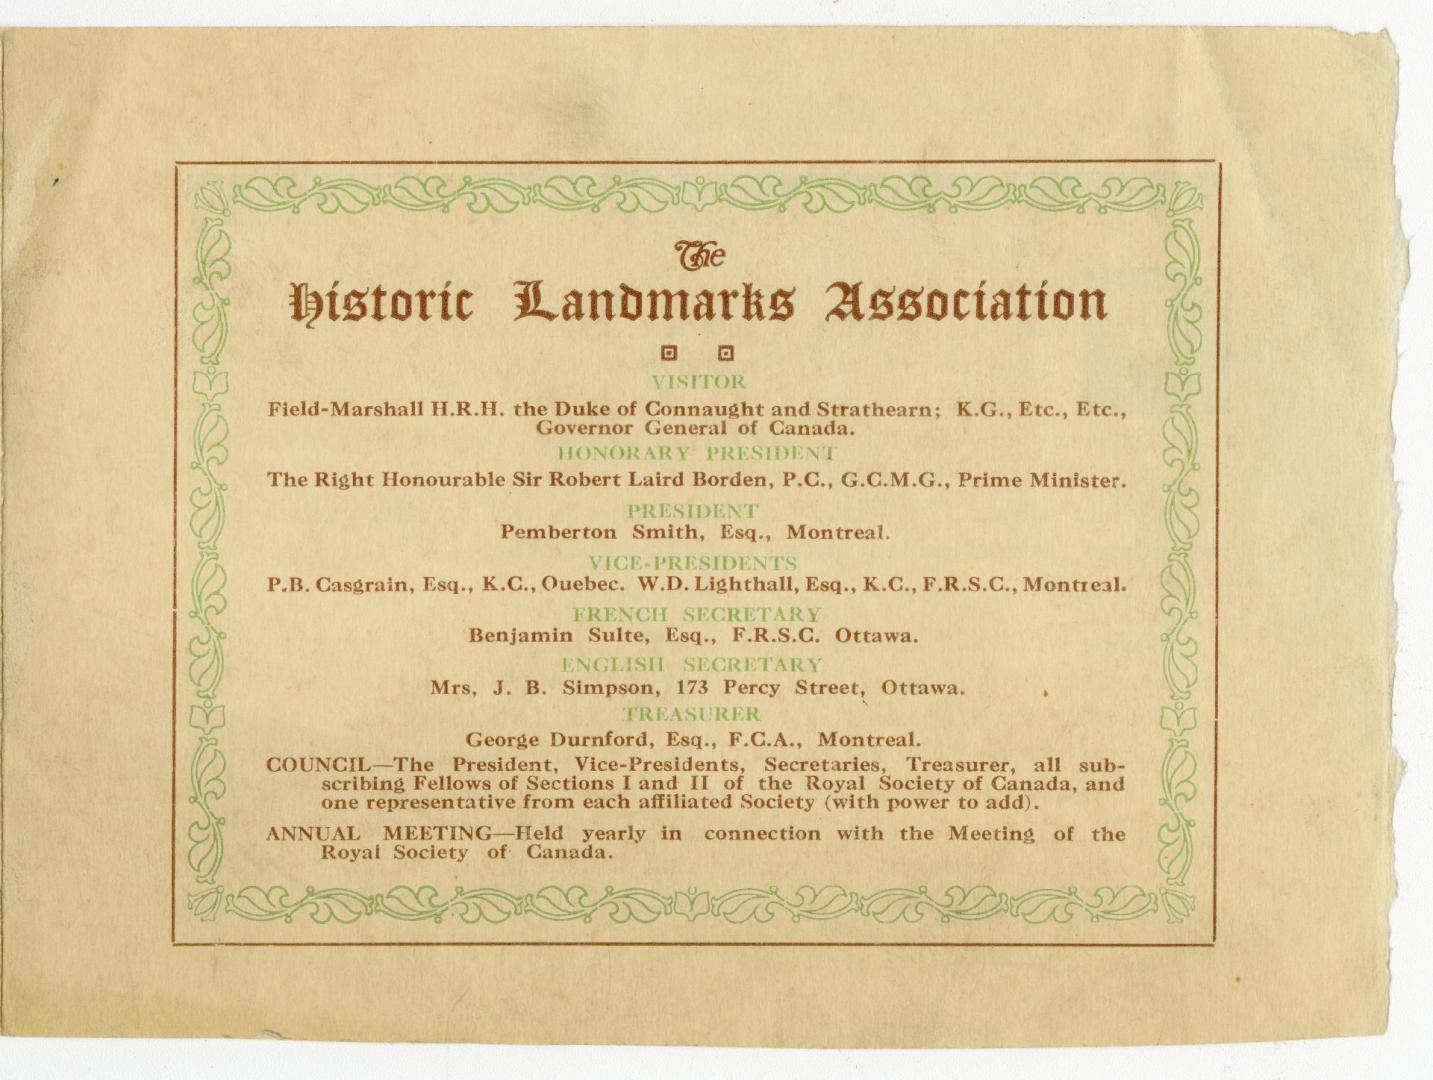 The Historic Landmarks Association